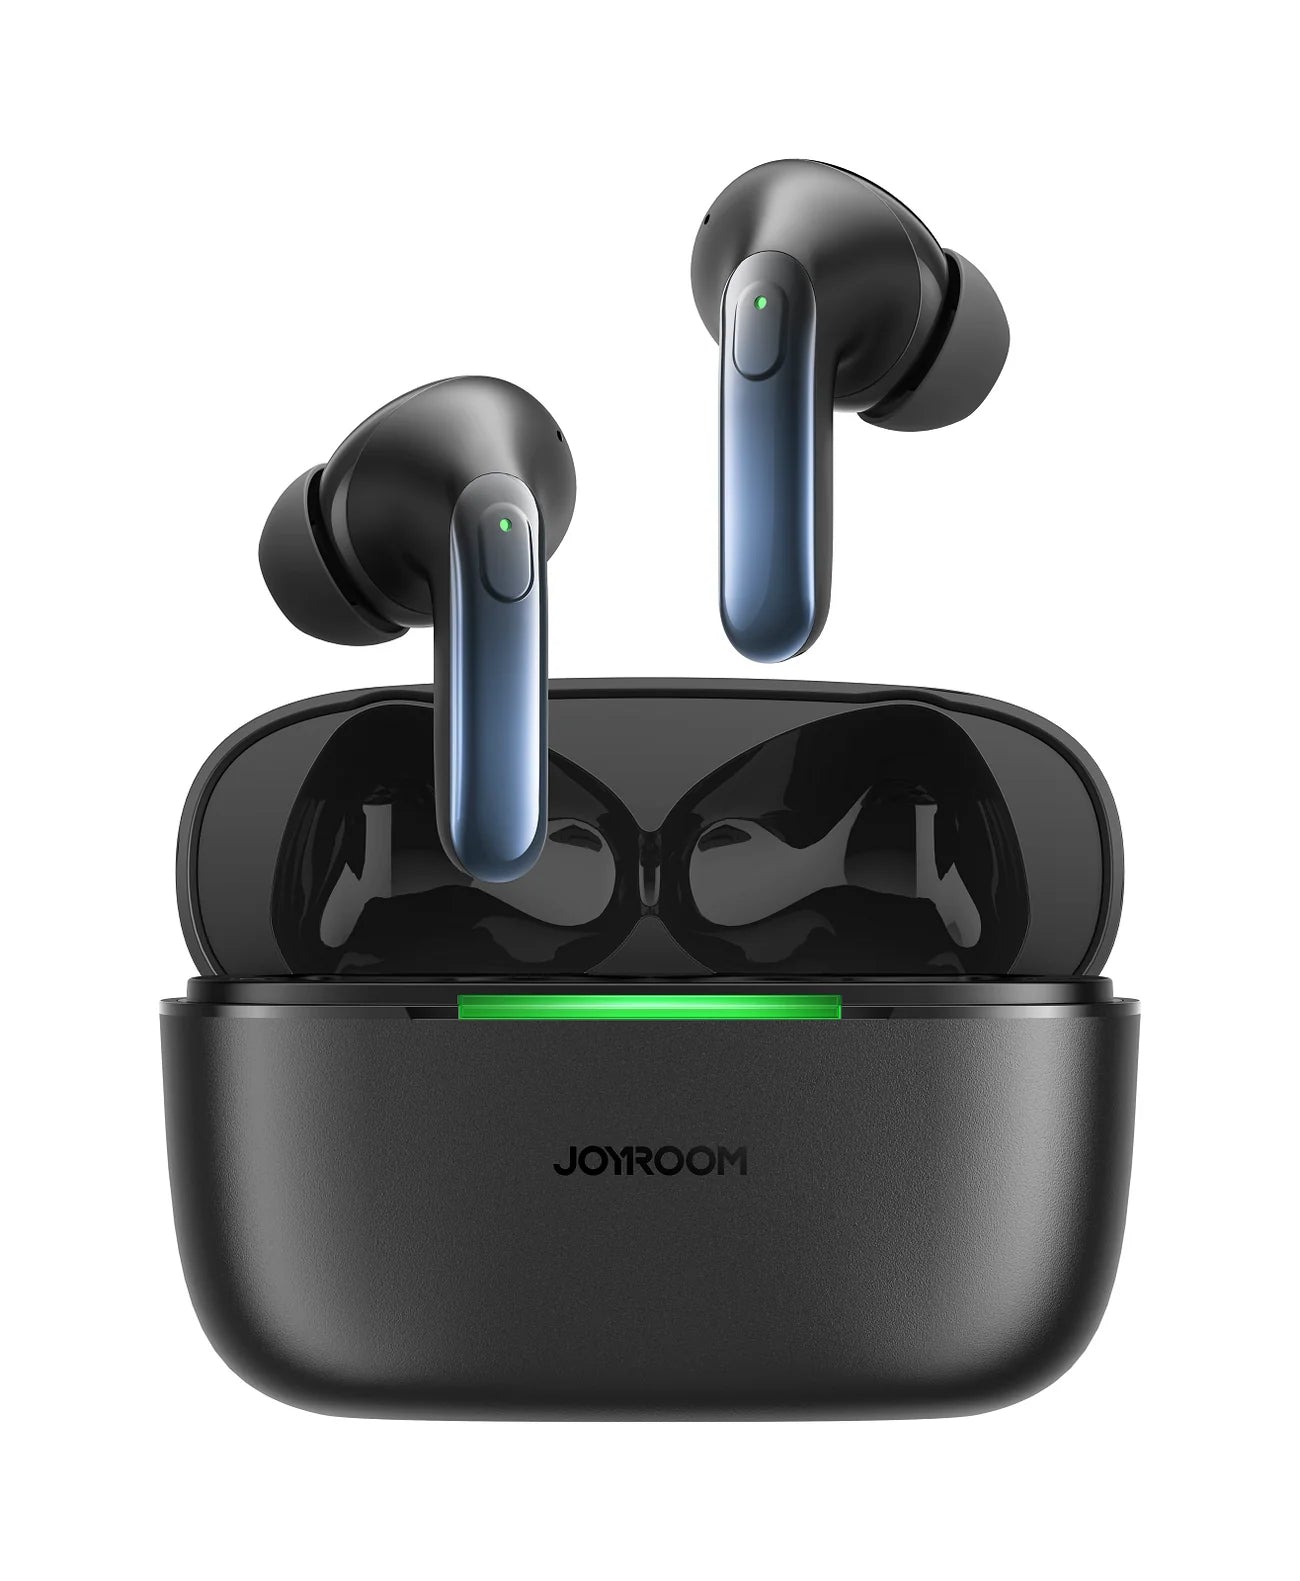 Joyroom Jbuds Series True Wireless ANC Earbuds - Black